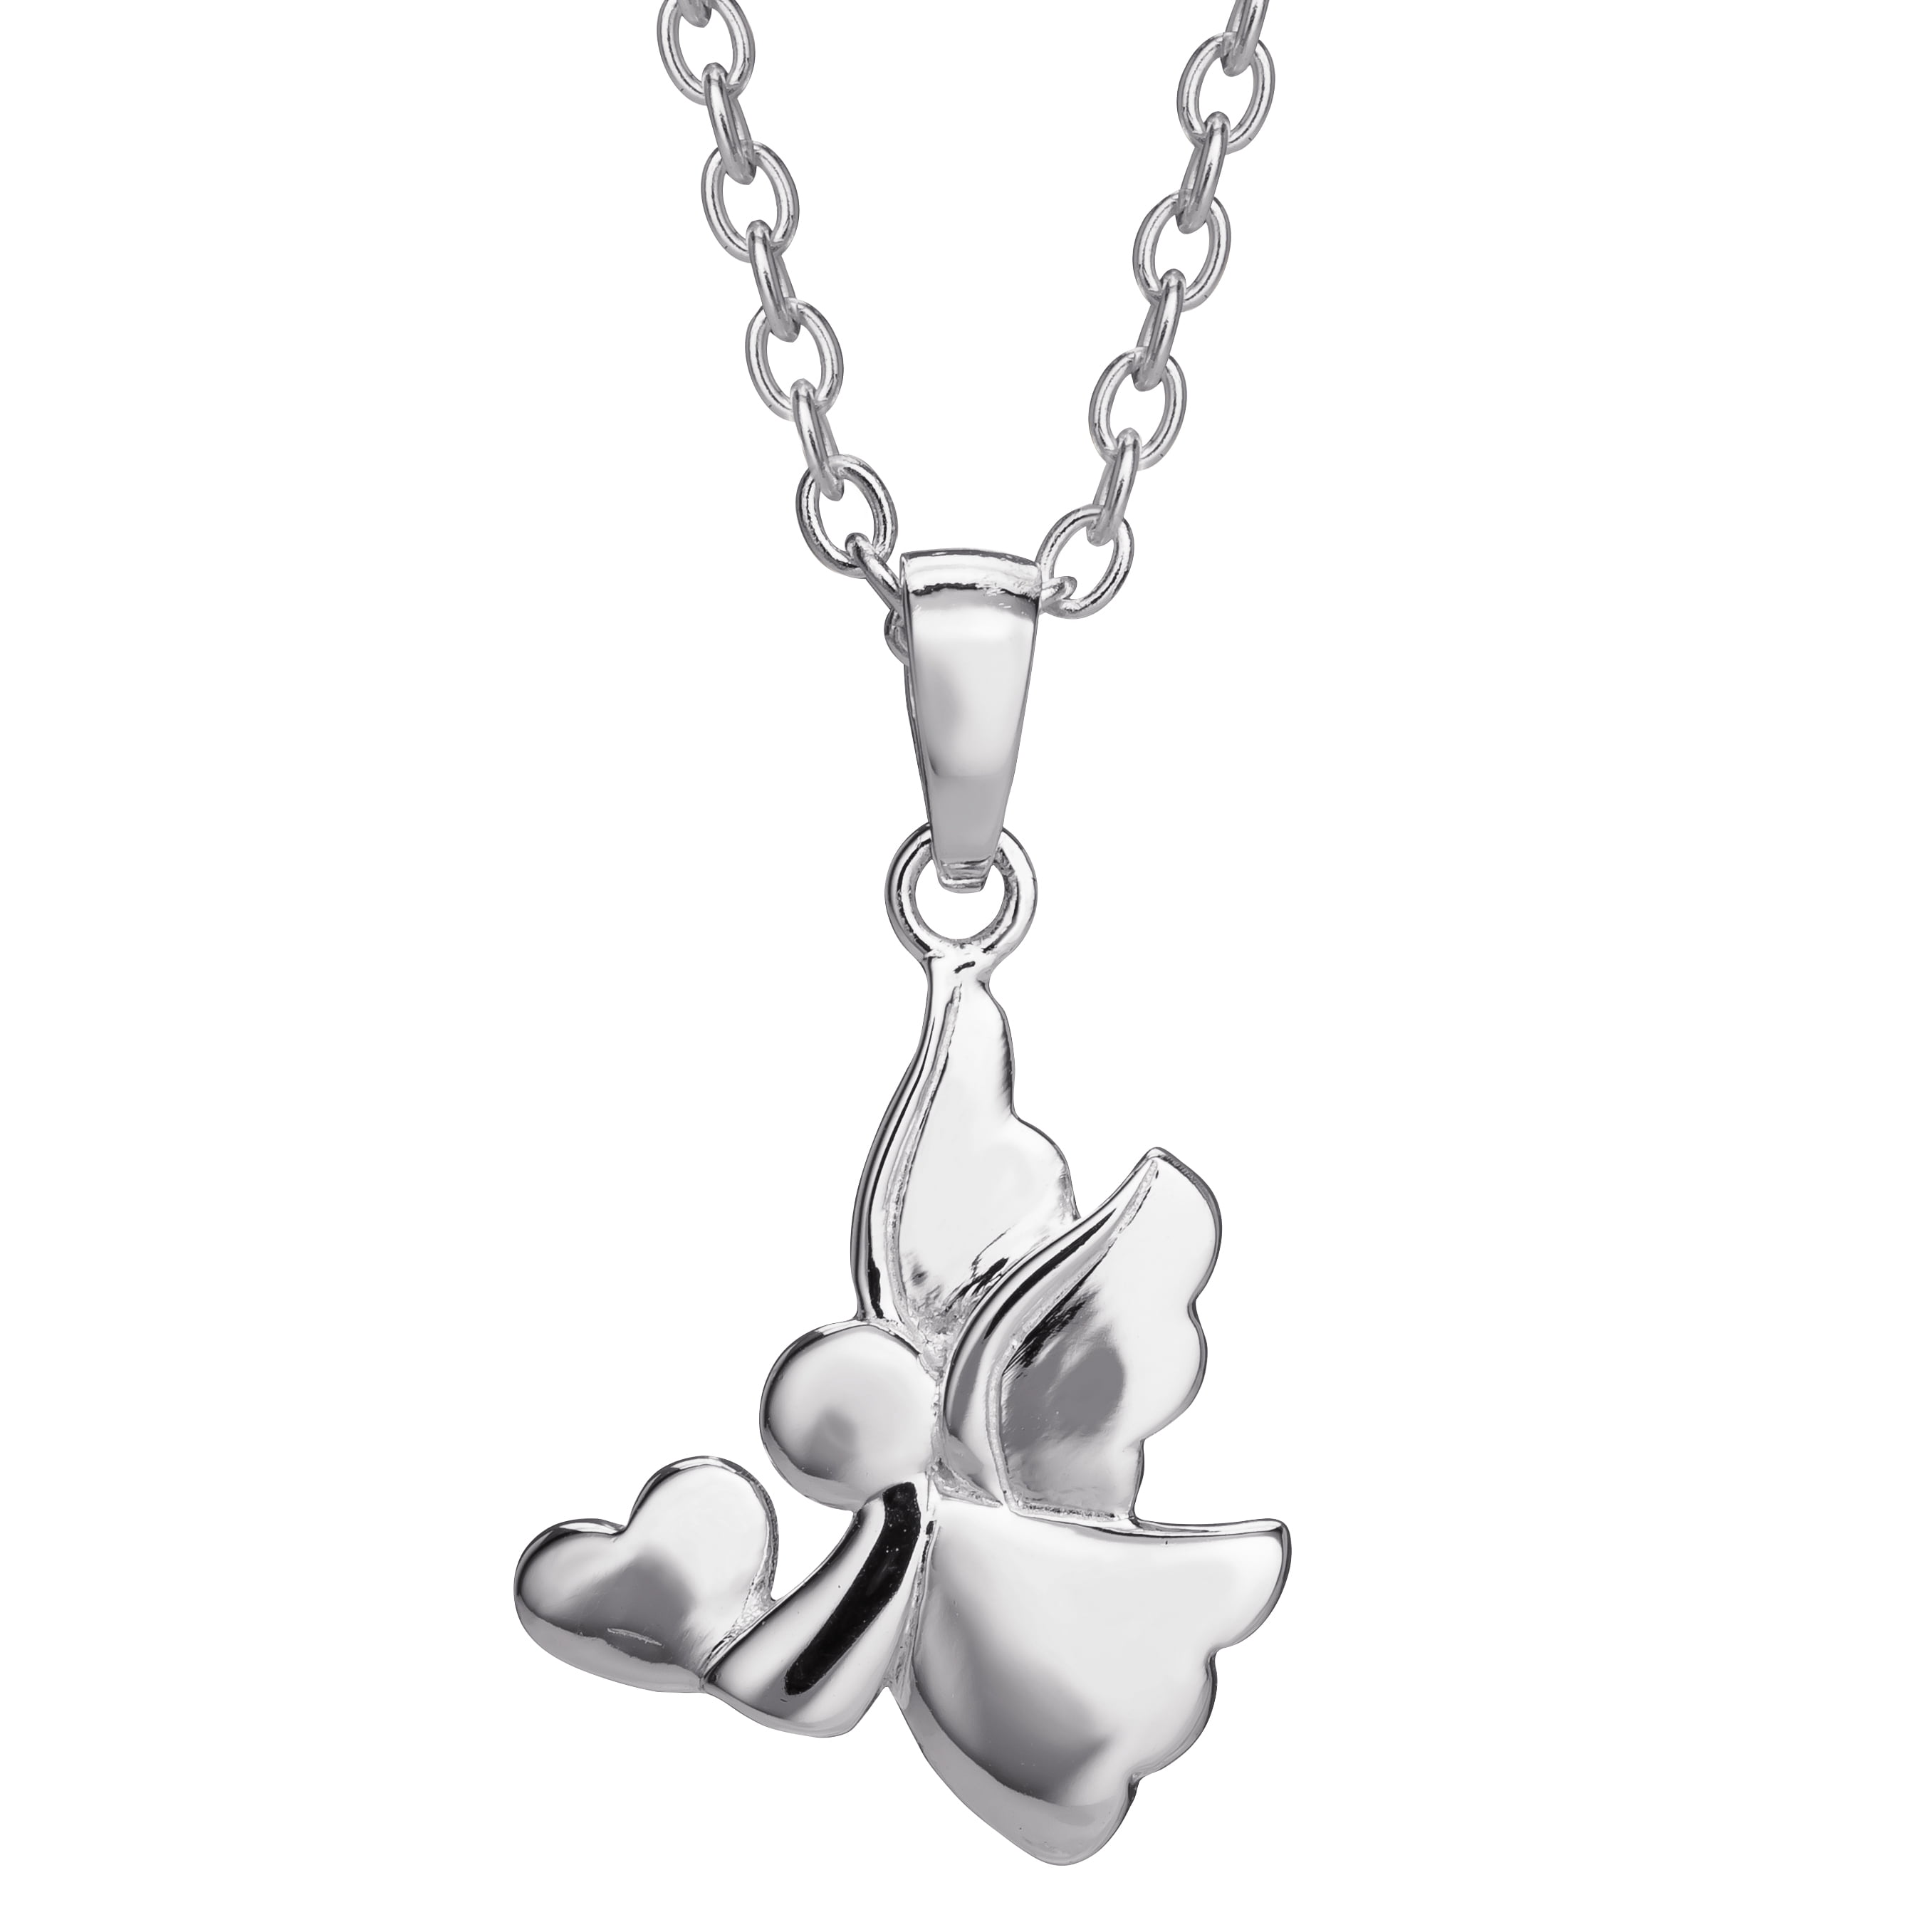 Hallmark Jewelry Sterling Silver Little Angel Pendant Necklace, 18